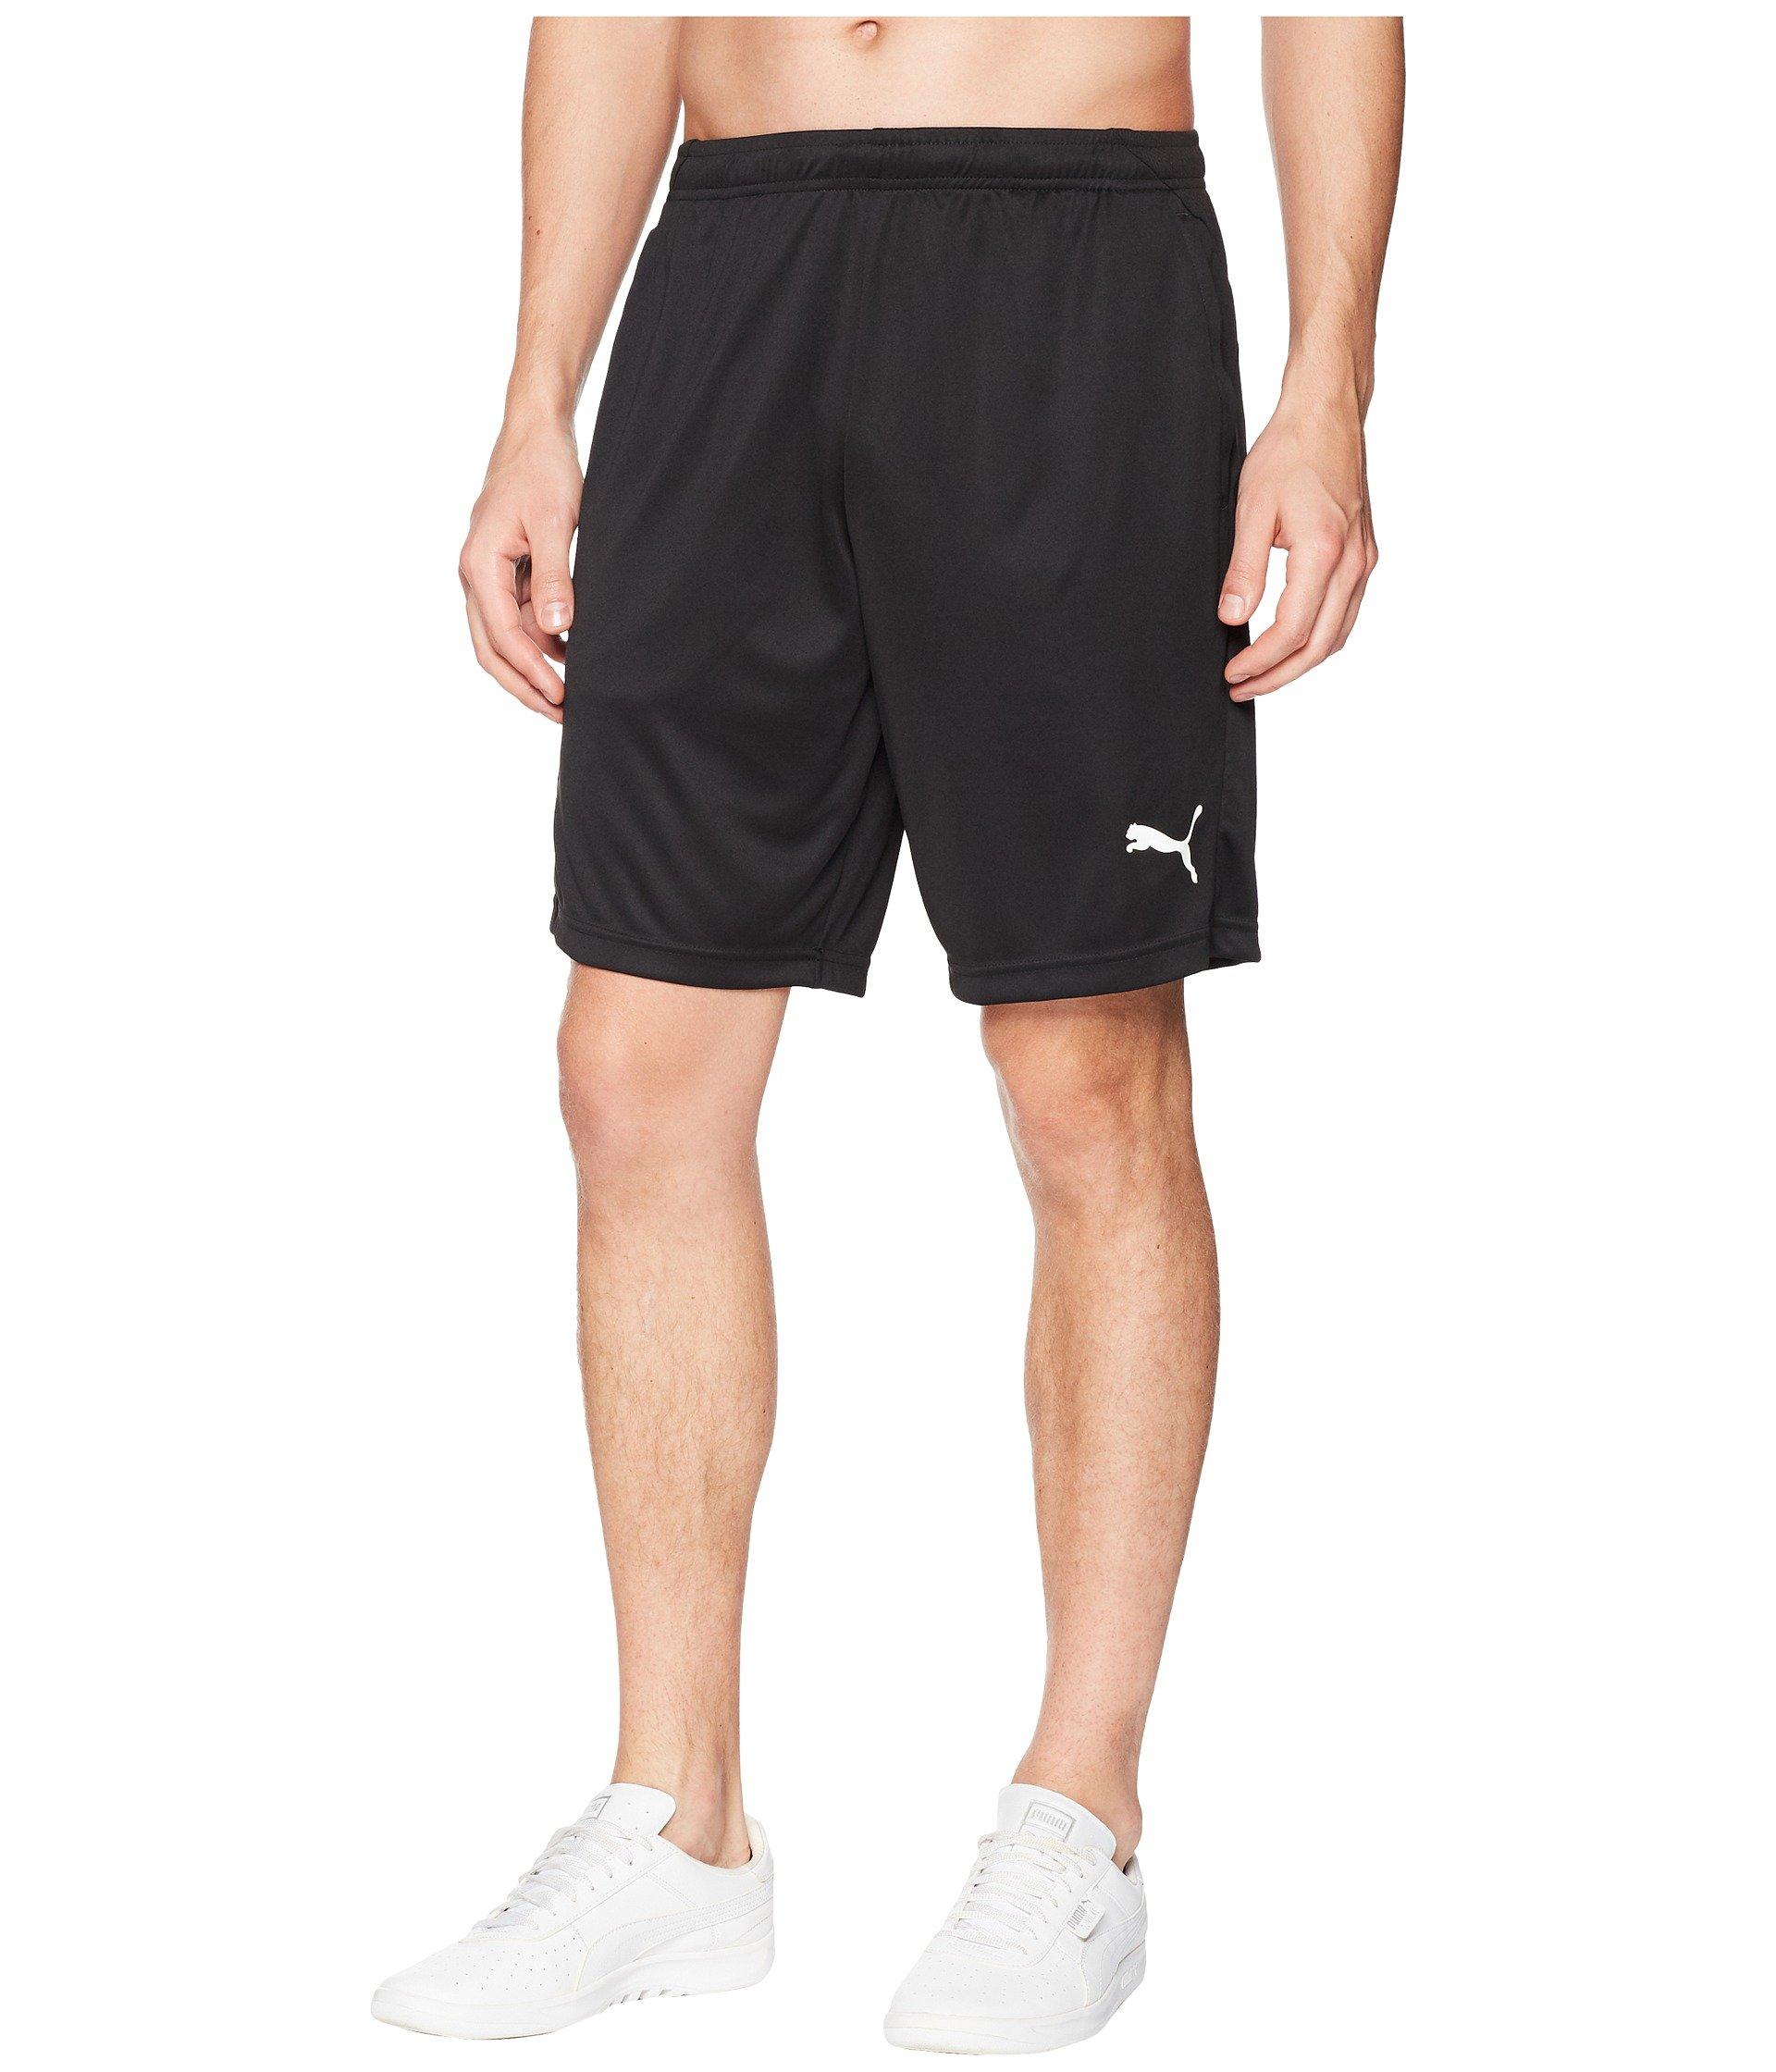 PUMA Synthetic Liga Training Shorts in Black for Men - Save 57% - Lyst